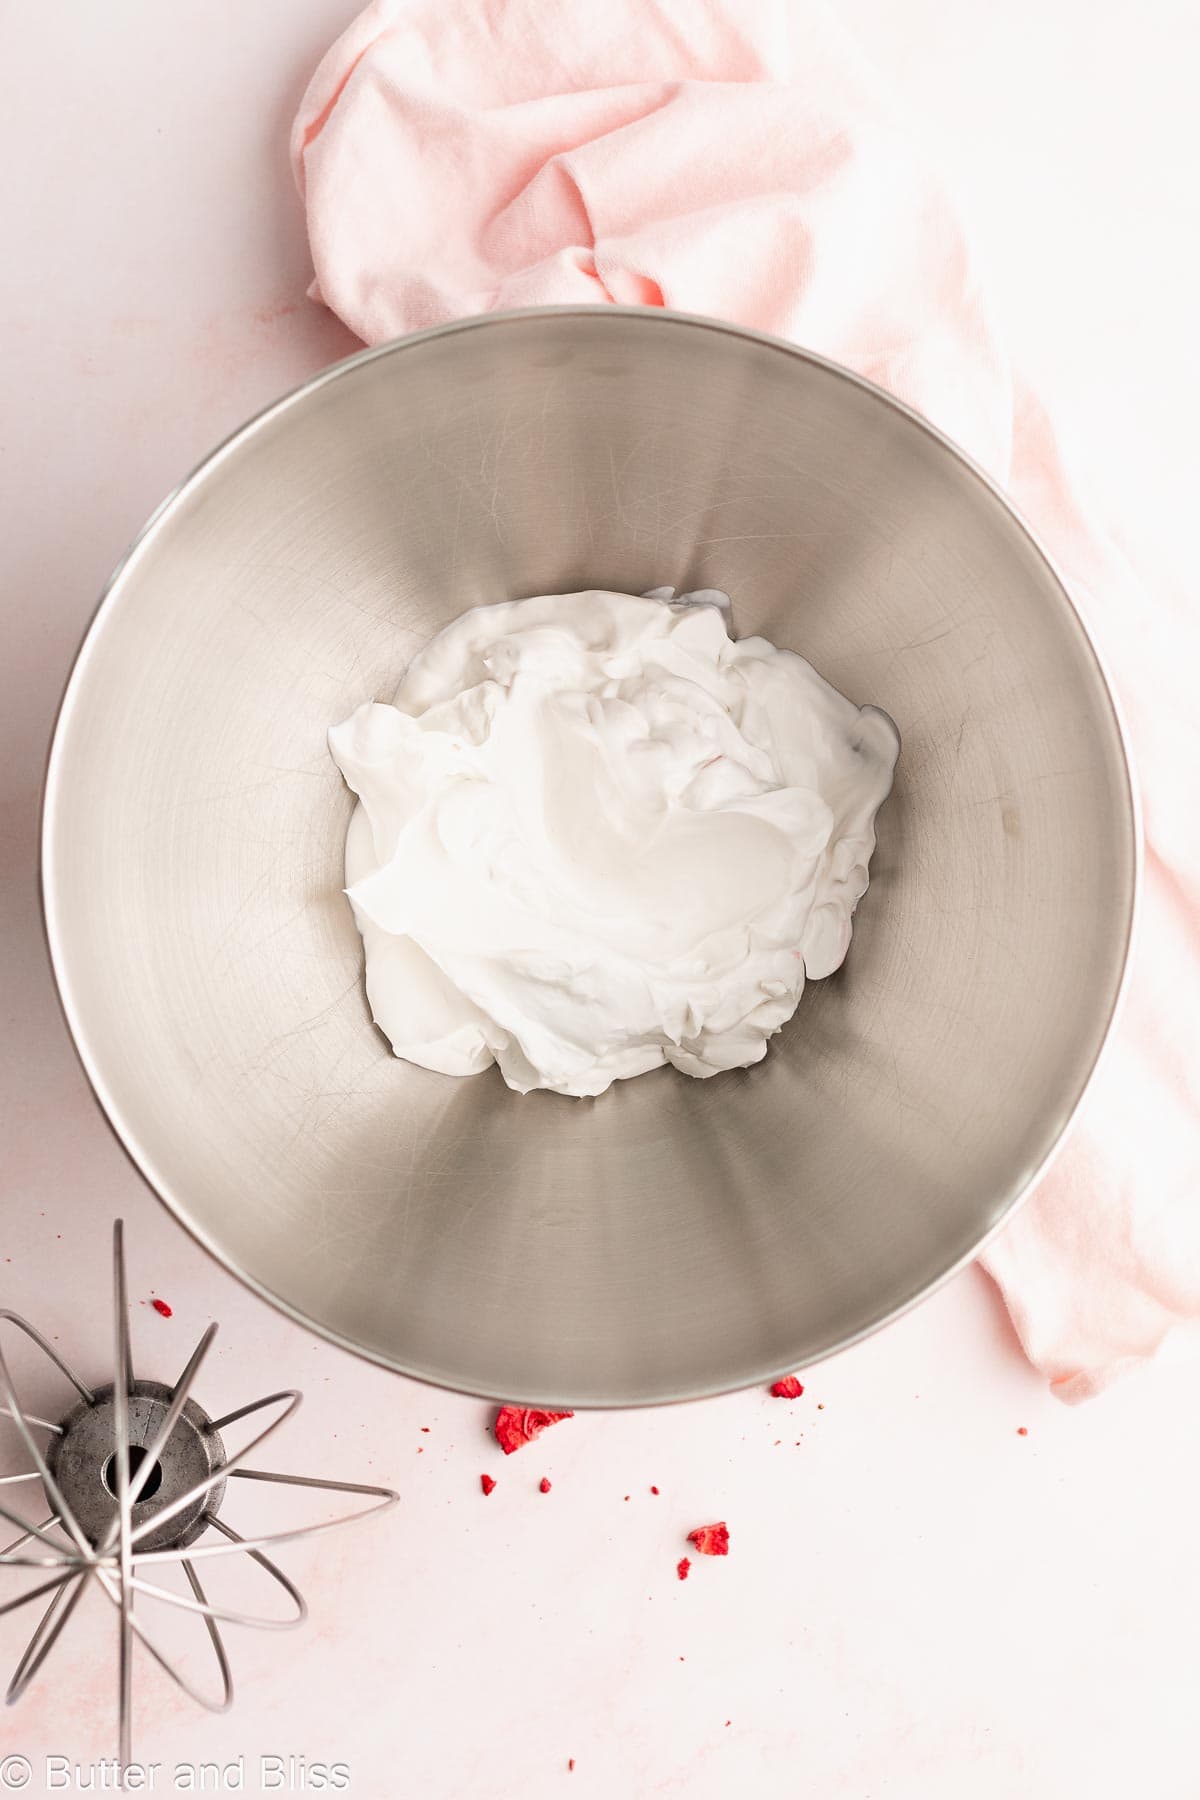 Creamy coconut cream in a mixing bowl.